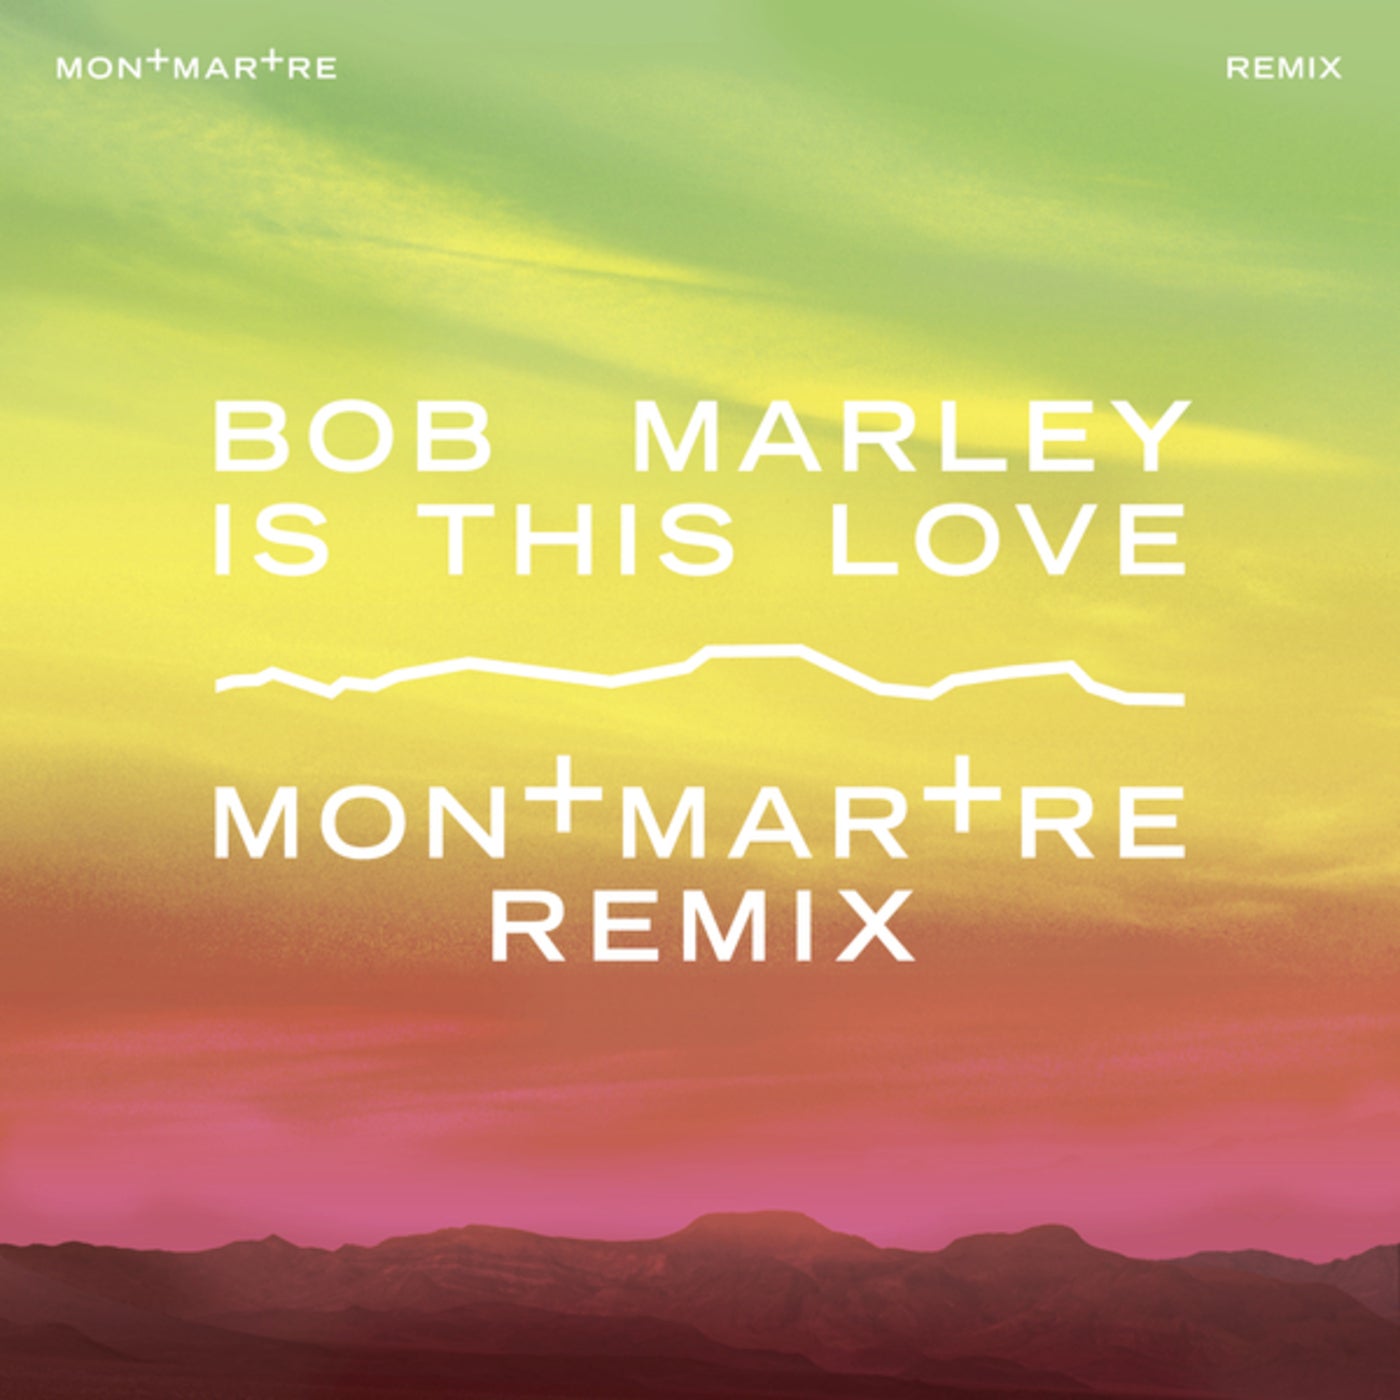 Bob marley one love 2024. Is this Love Bob Marley. Bob Marley Remix. Bob Marley the Wailers is this Love. Bob Marley is this Love (Sylow Remix).